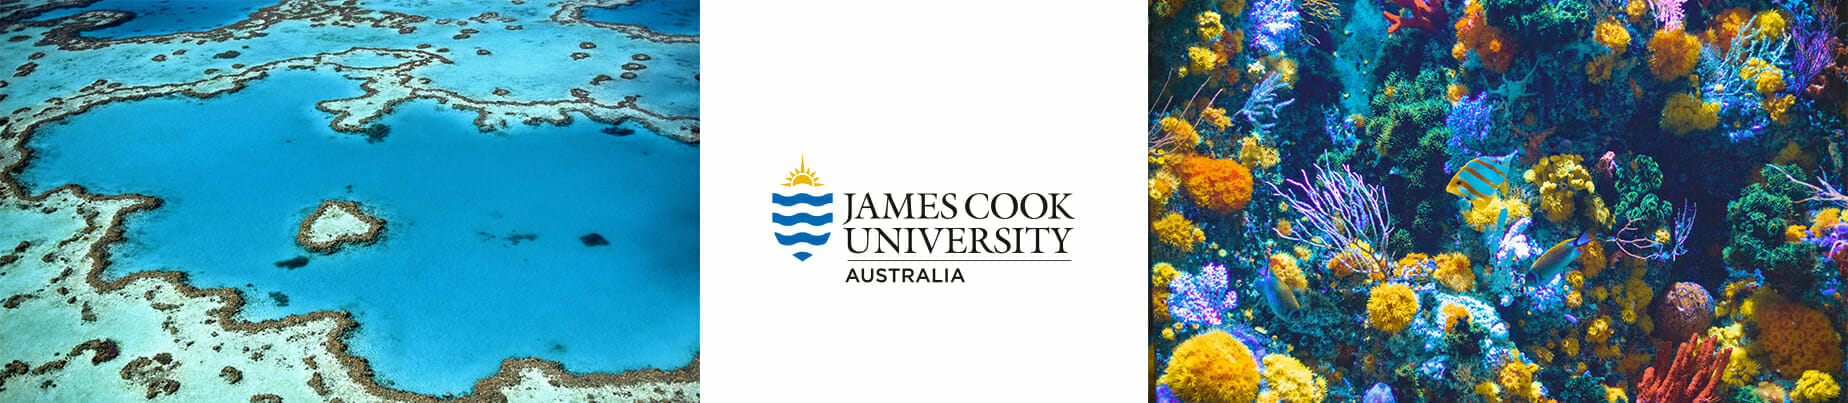 james cook university